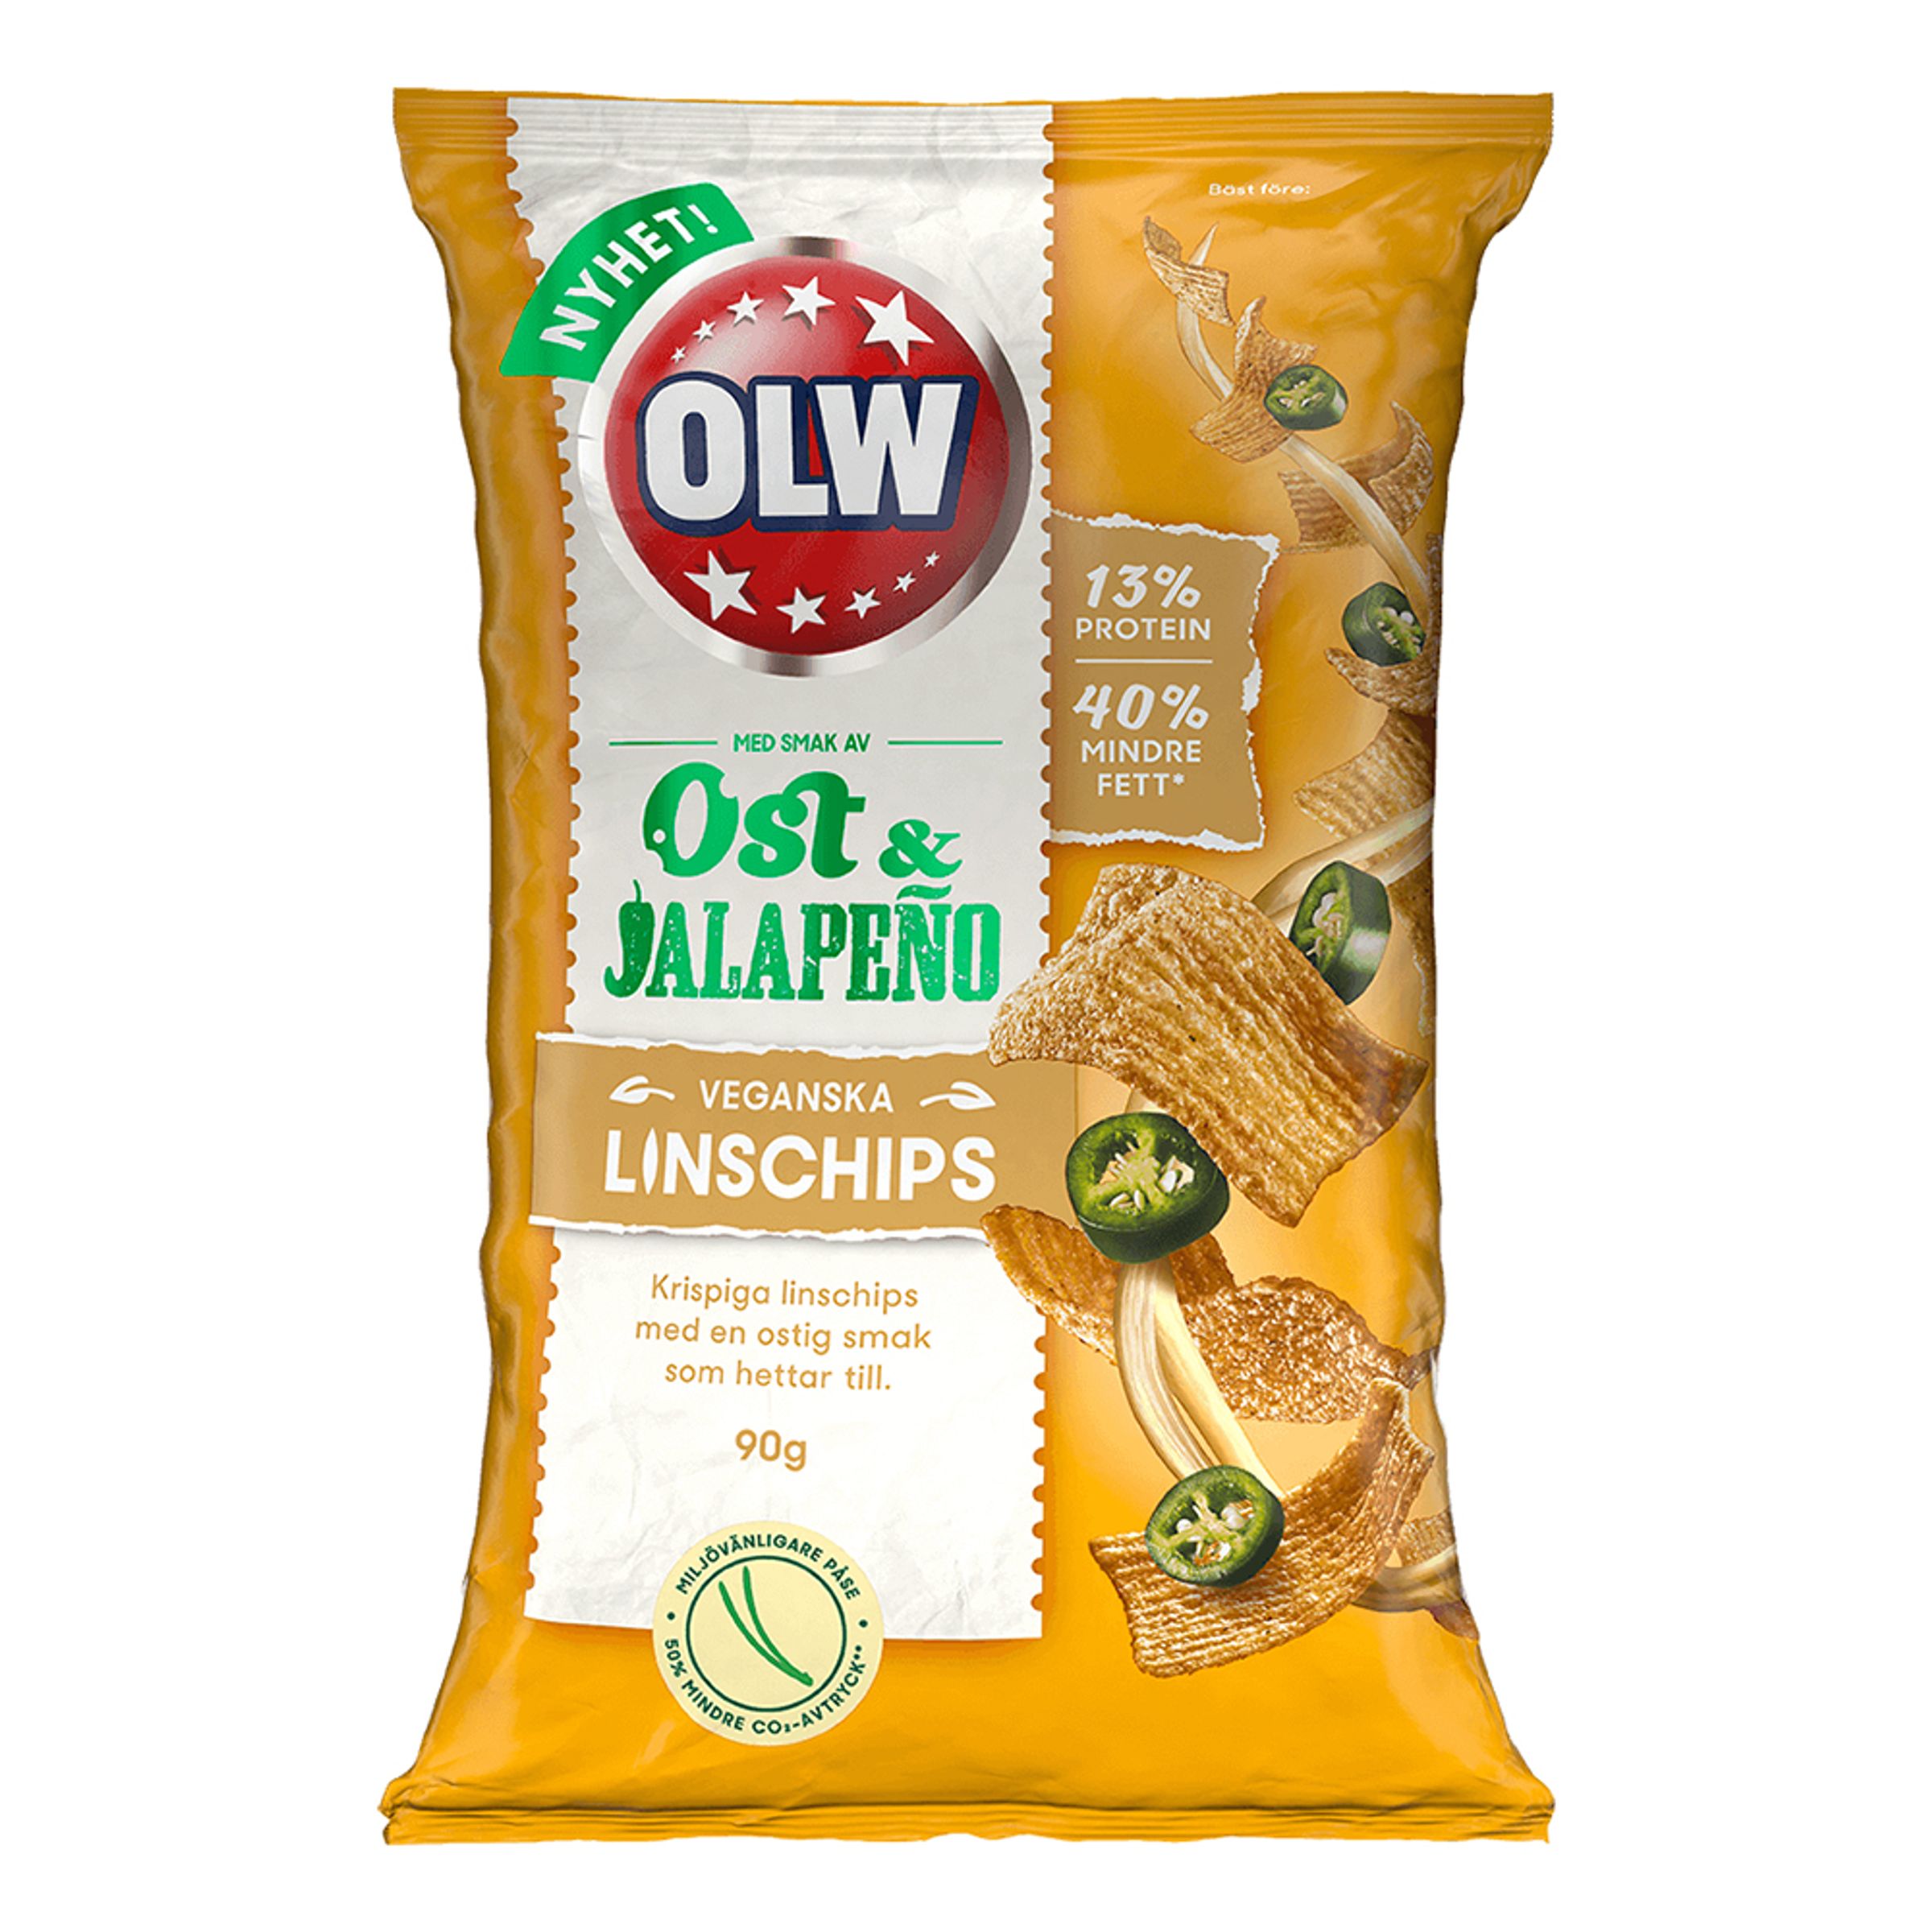 OLW Linschips Ost & Jalapeno - 90 gram